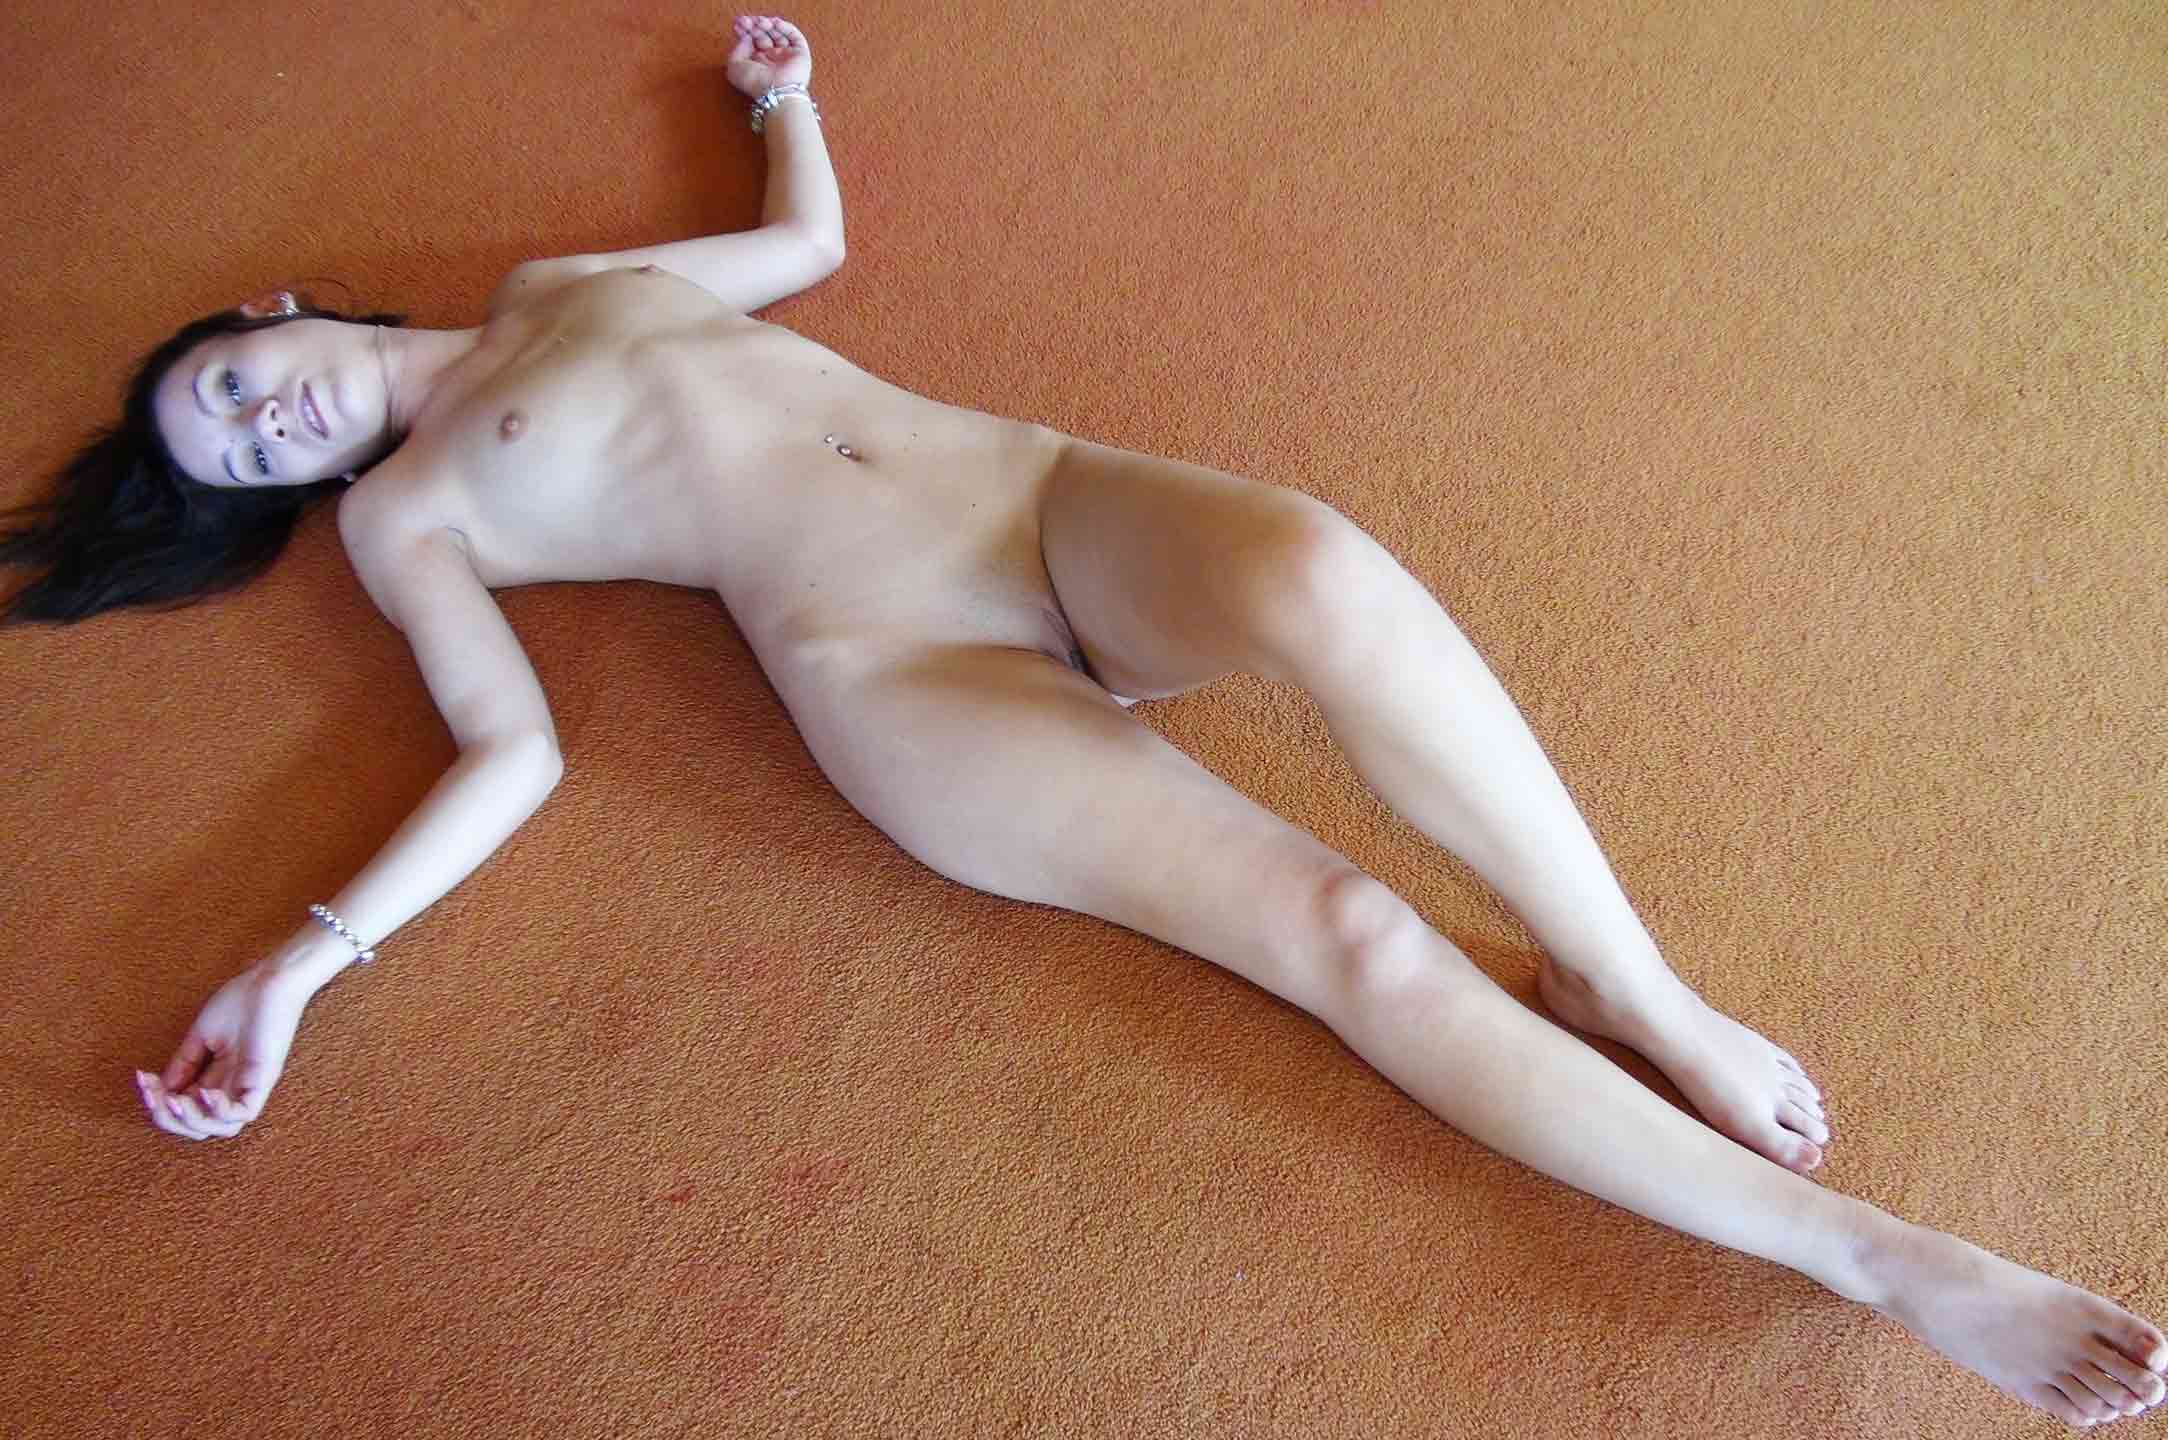 Images of naked girls: Dolce Far Niente 2 - Girl on carpet